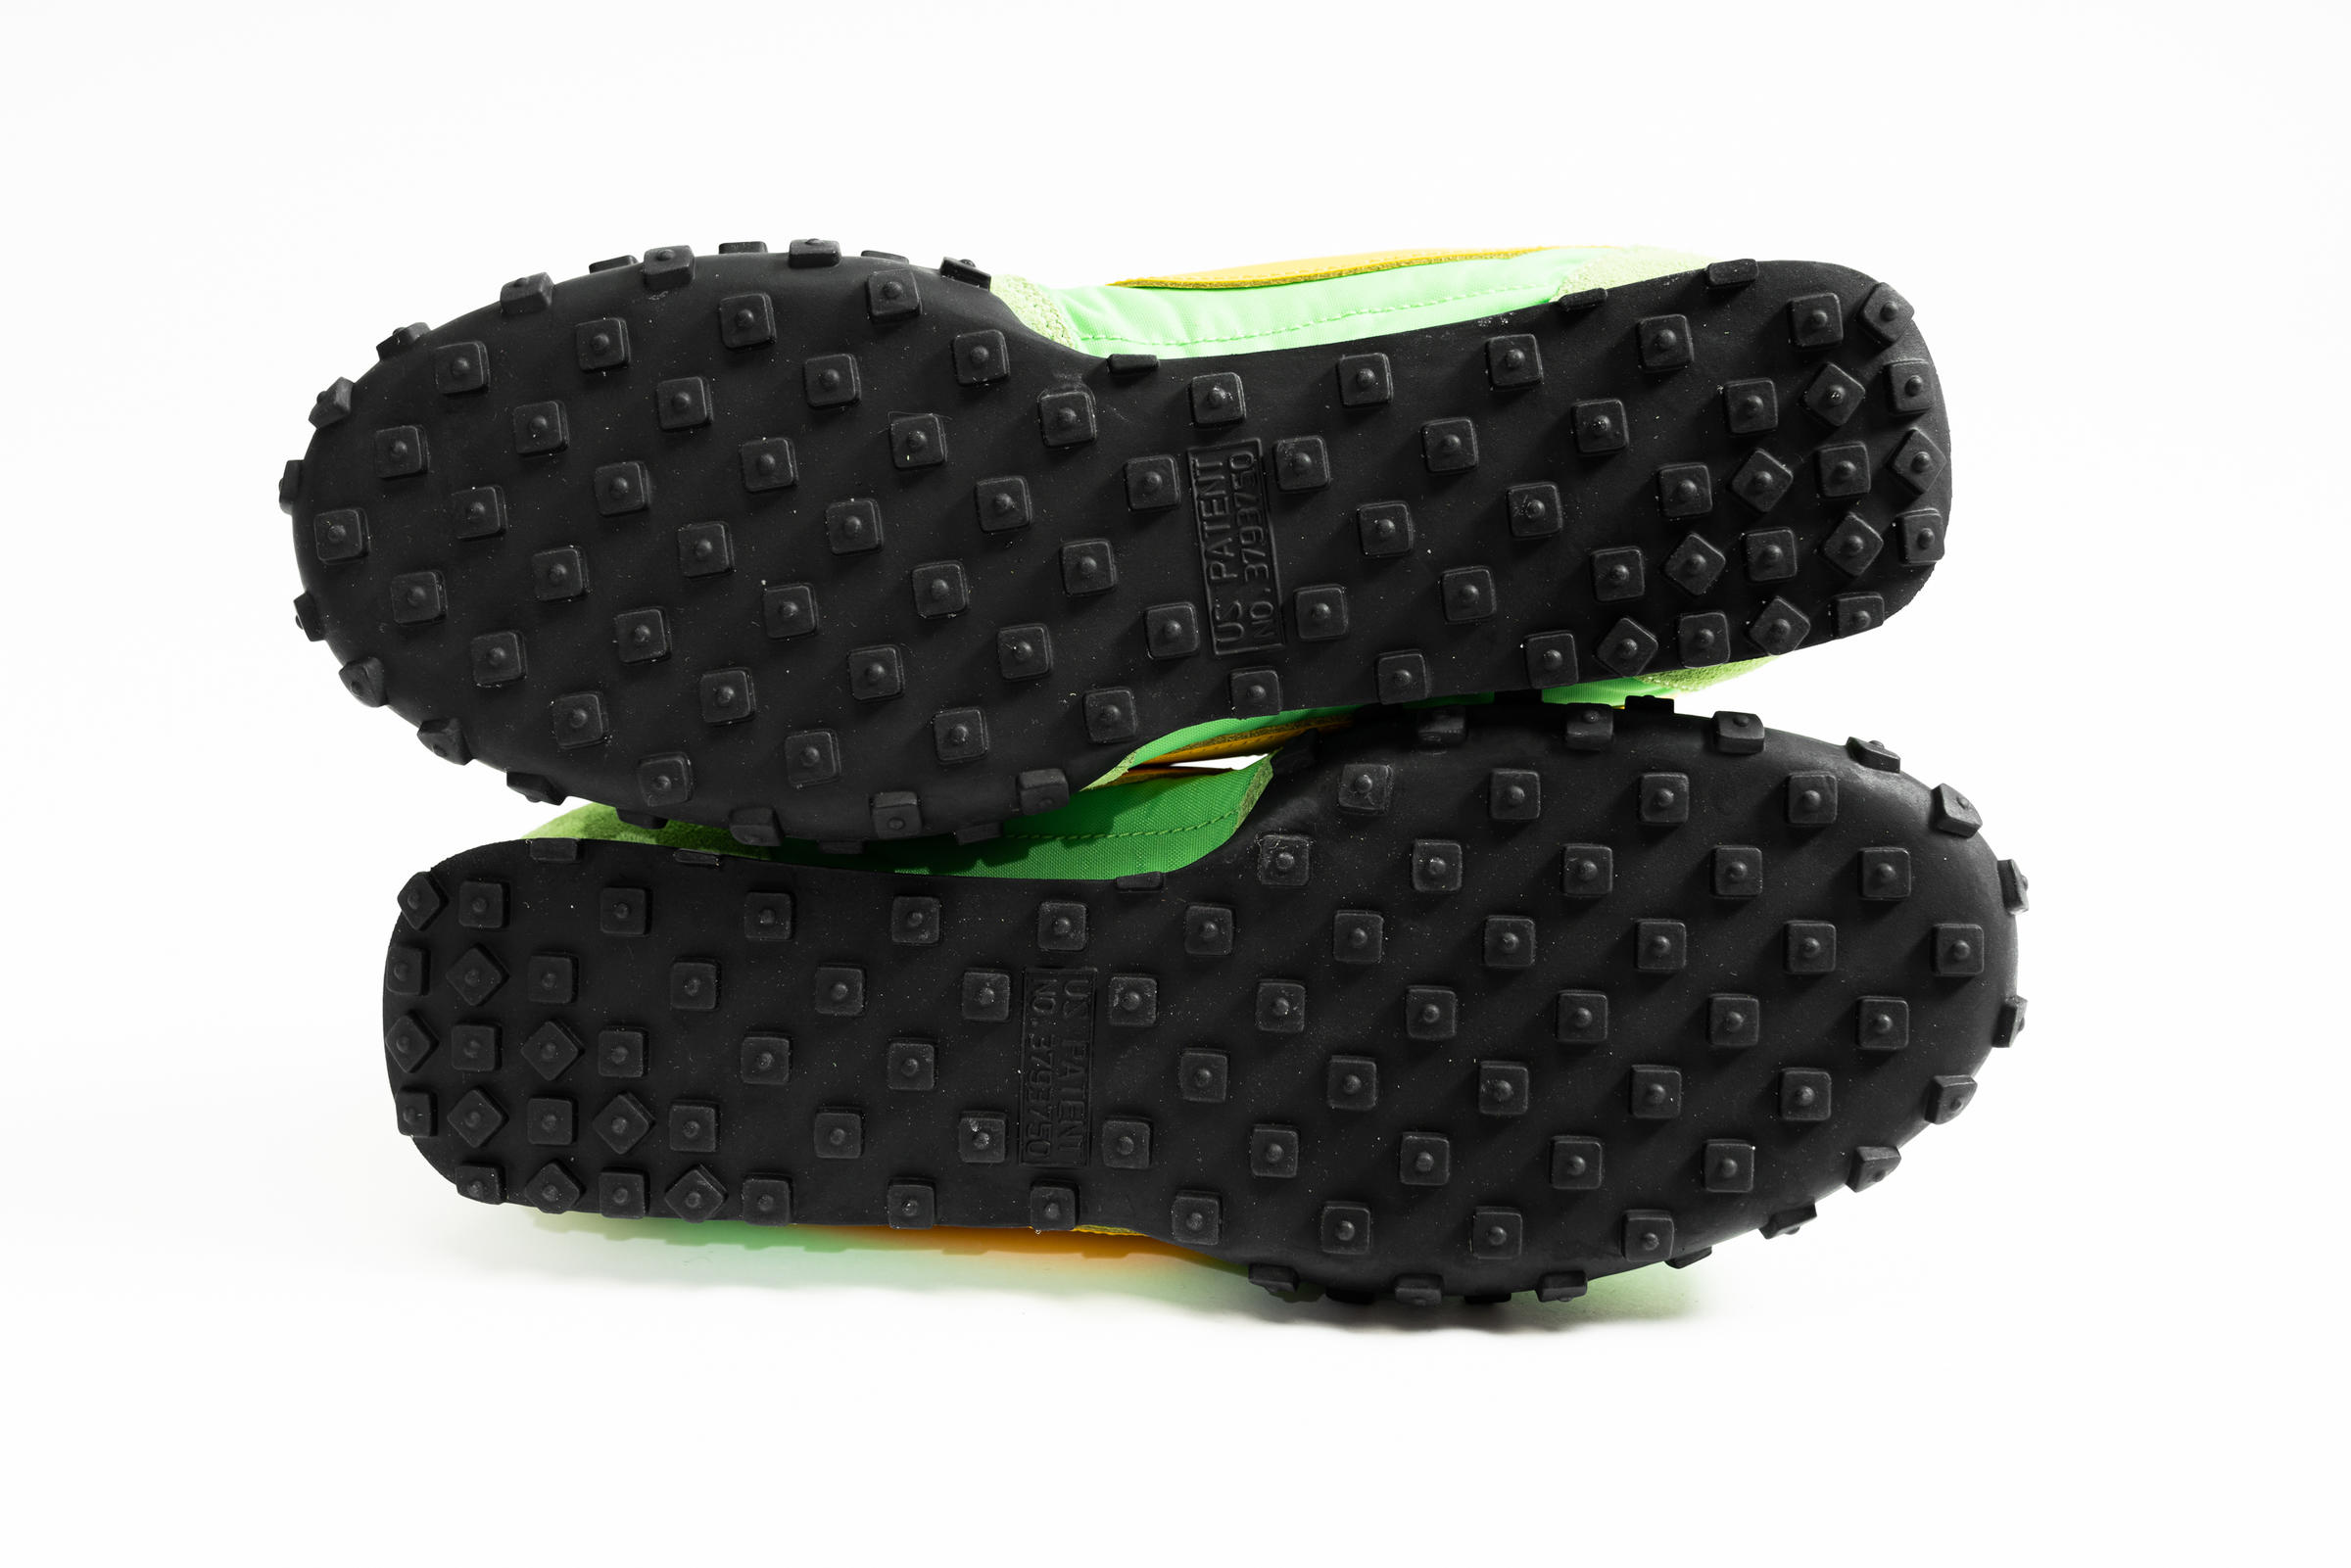 Nike WAFFLE RACER "Green Nebula"